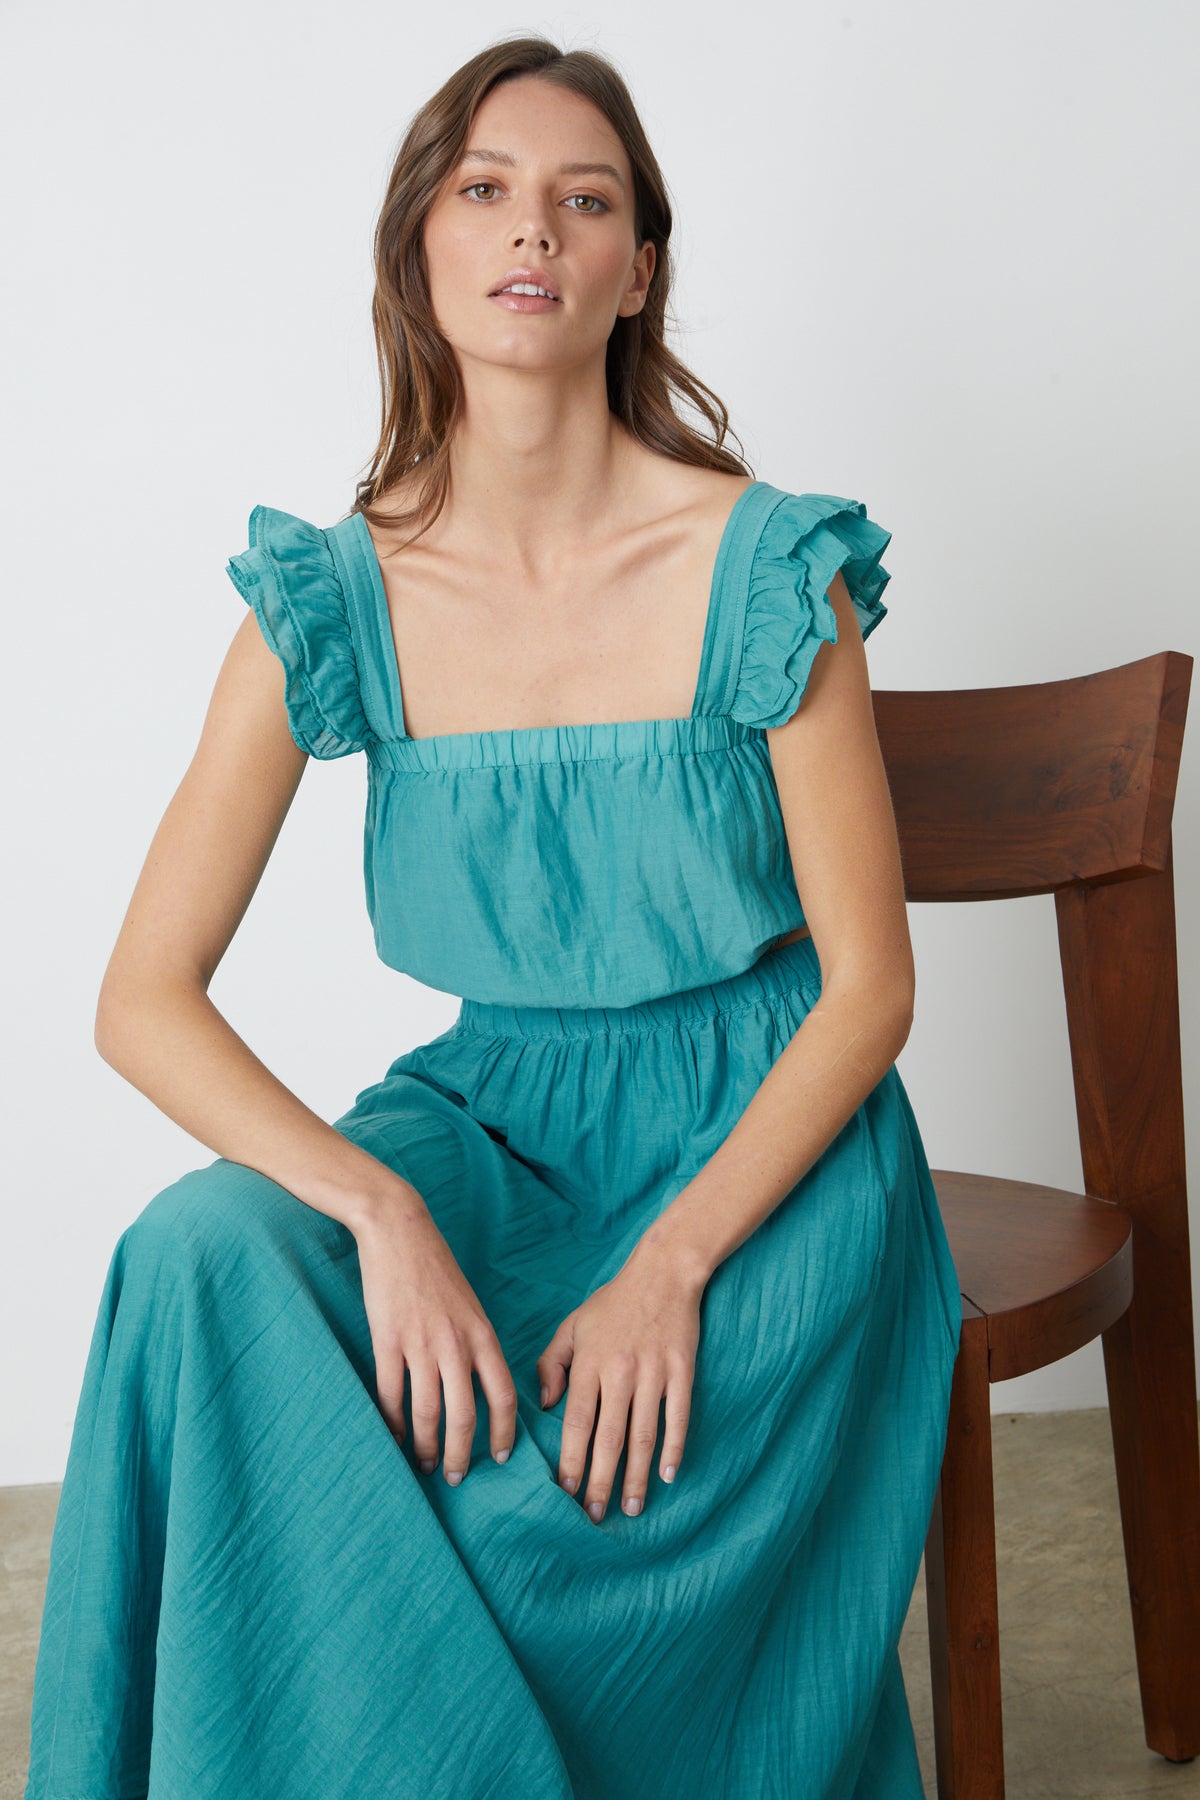 The model is wearing a teal Velvet by Graham & Spencer ruffled maxi dress.-26342712213697